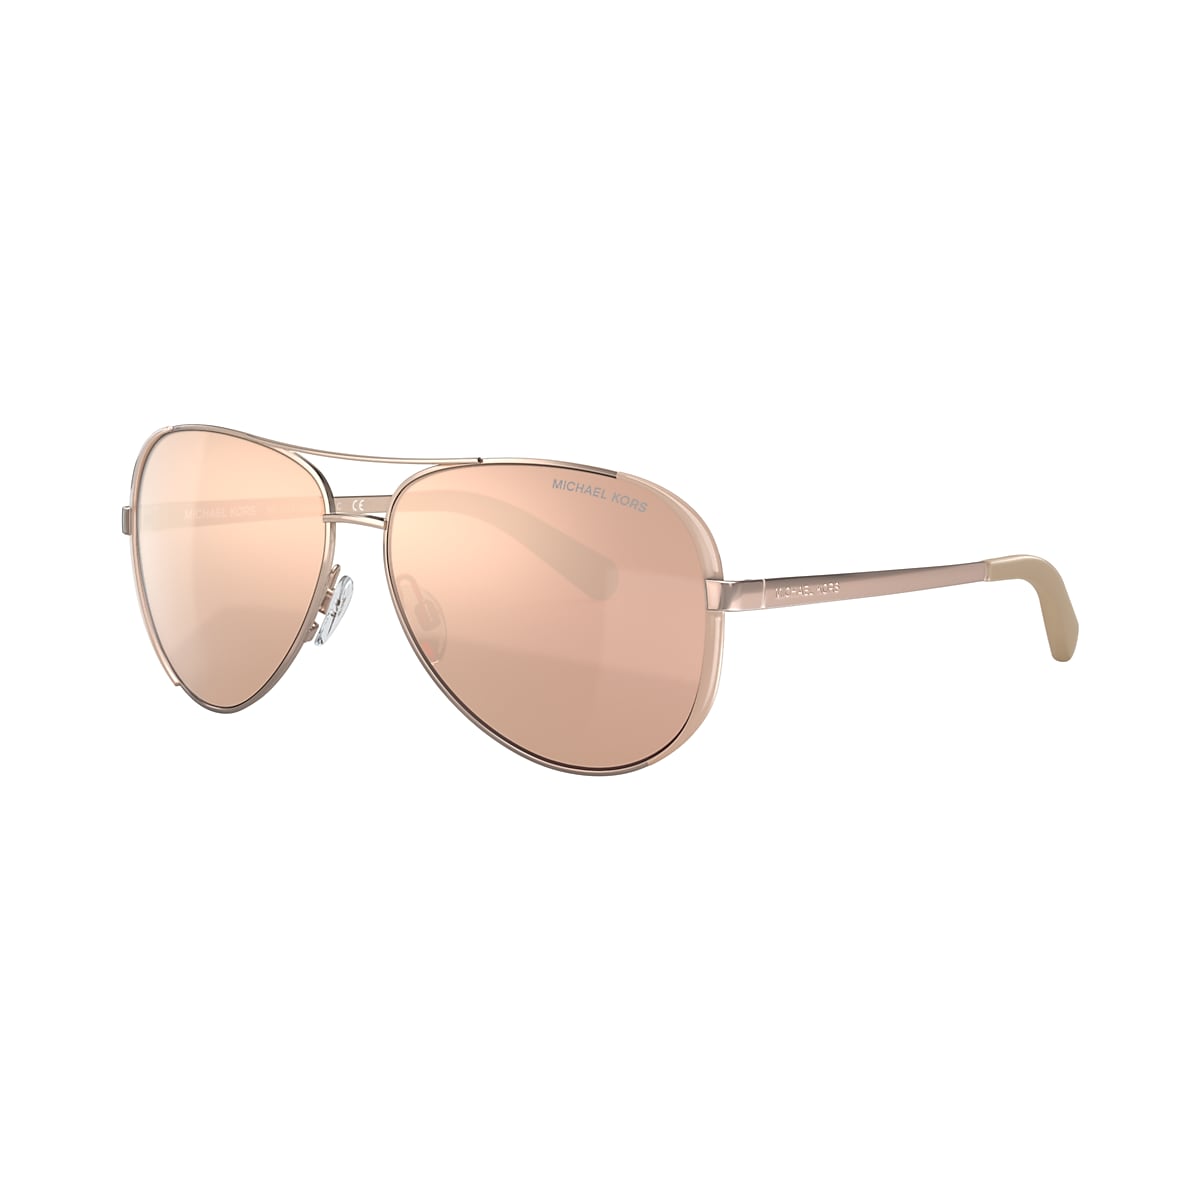 Kors MK5004 CHELSEA 59 Rose Gold Flash & Rose Gold/Taupe Sunglasses Sunglass USA